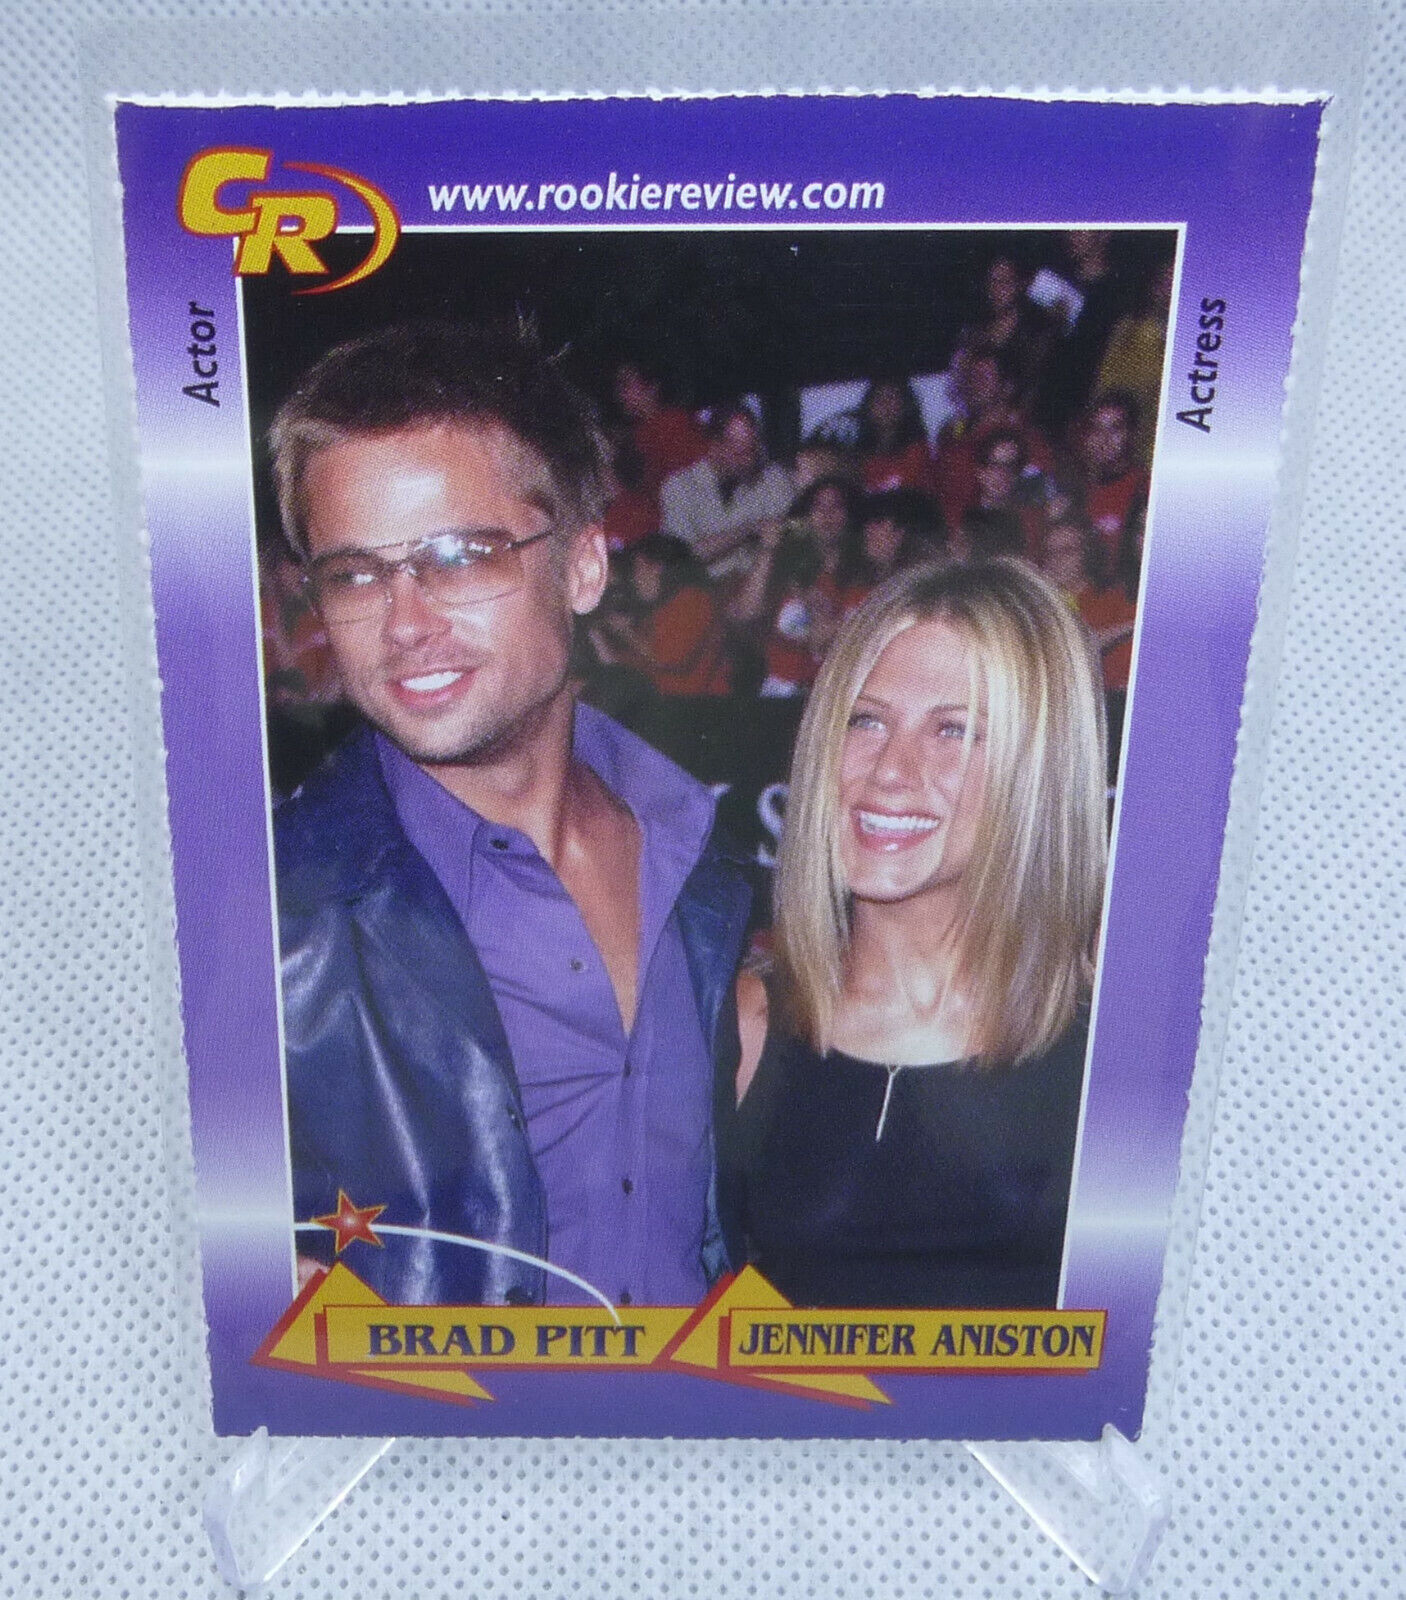 2003 Celebrity Review Rookie Review Brad Pitt Jennifer Aniston Actors Card #14